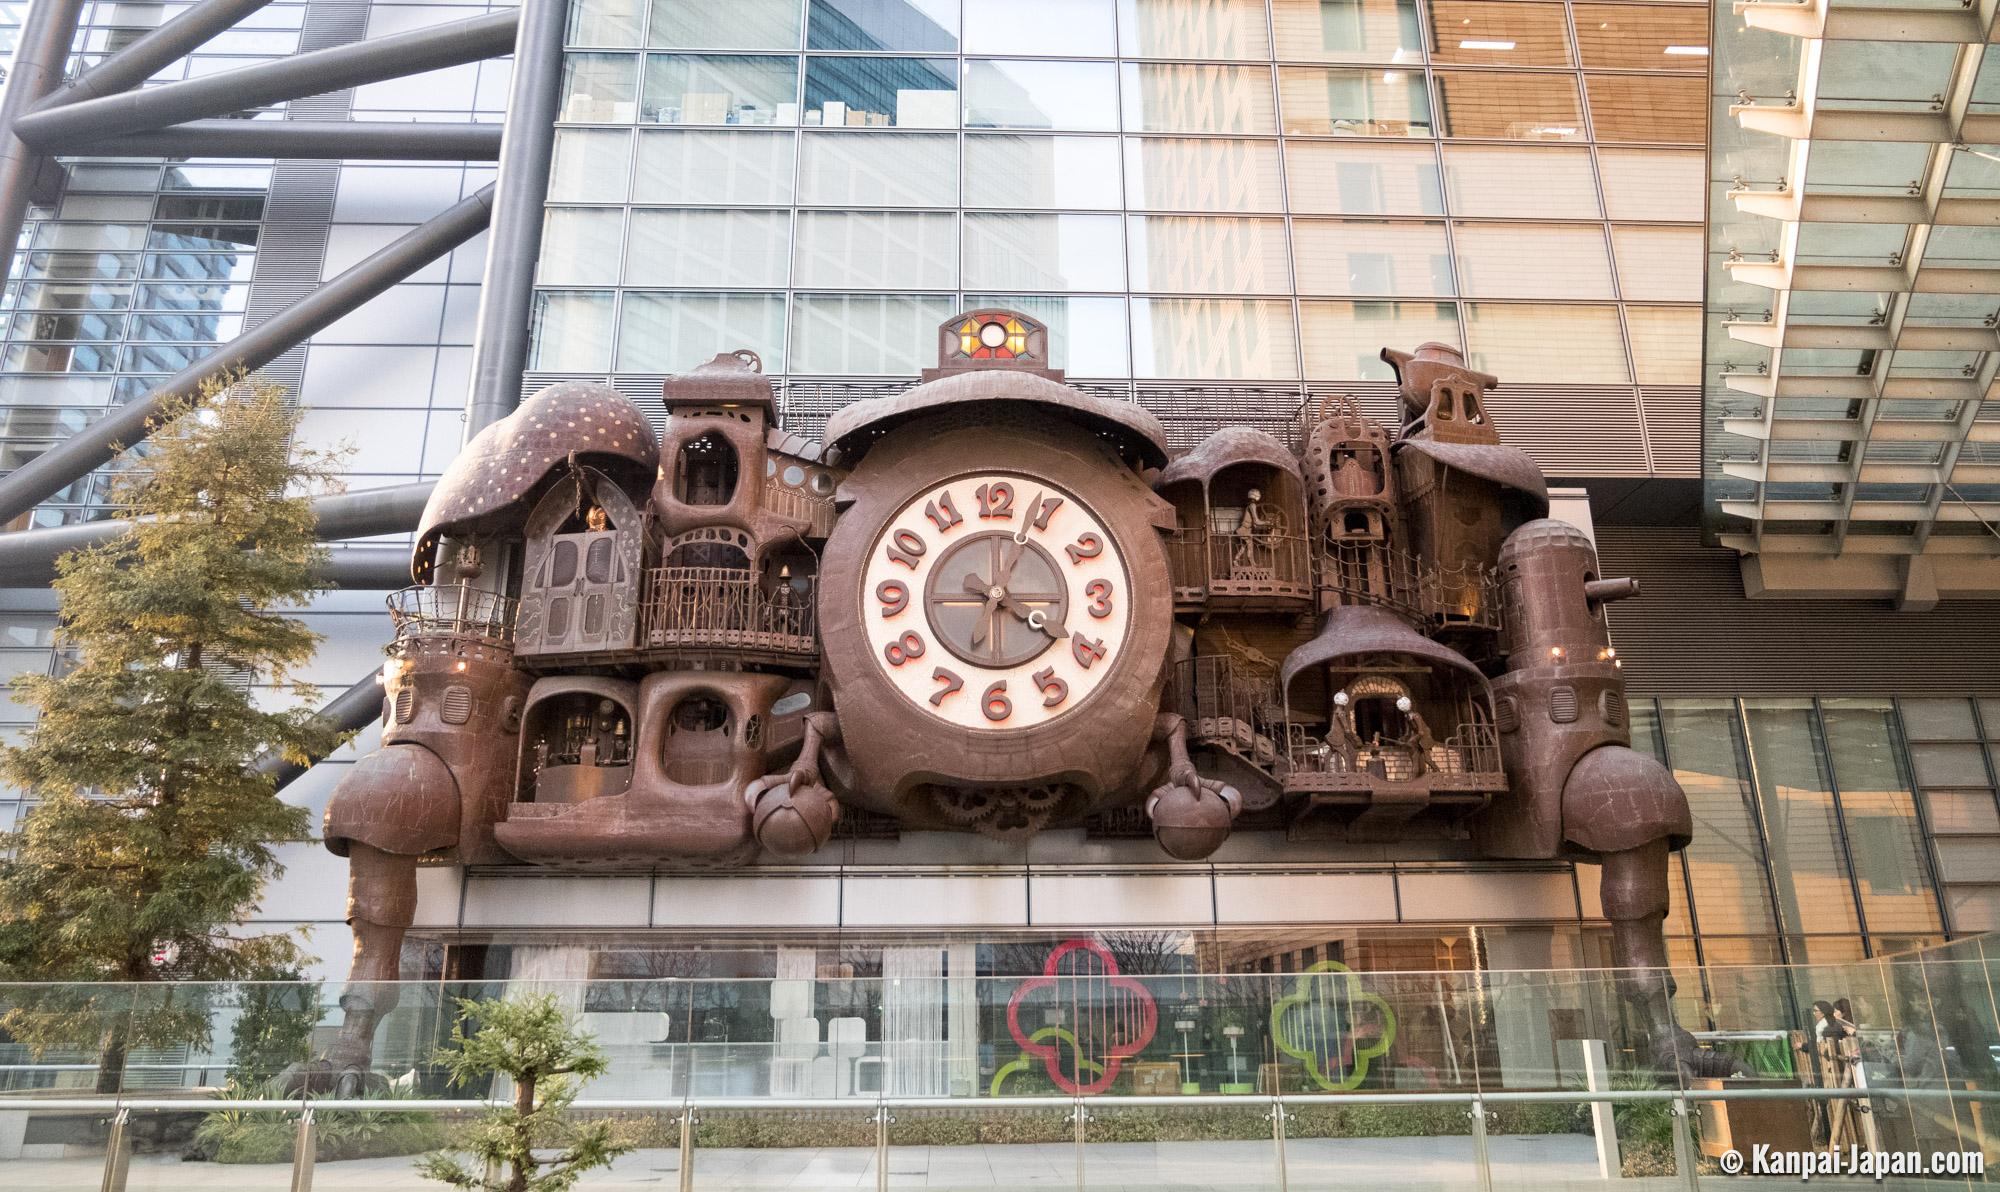 Nippon TV Odokei - Miyazaki’s Giant Clock in Tokyo